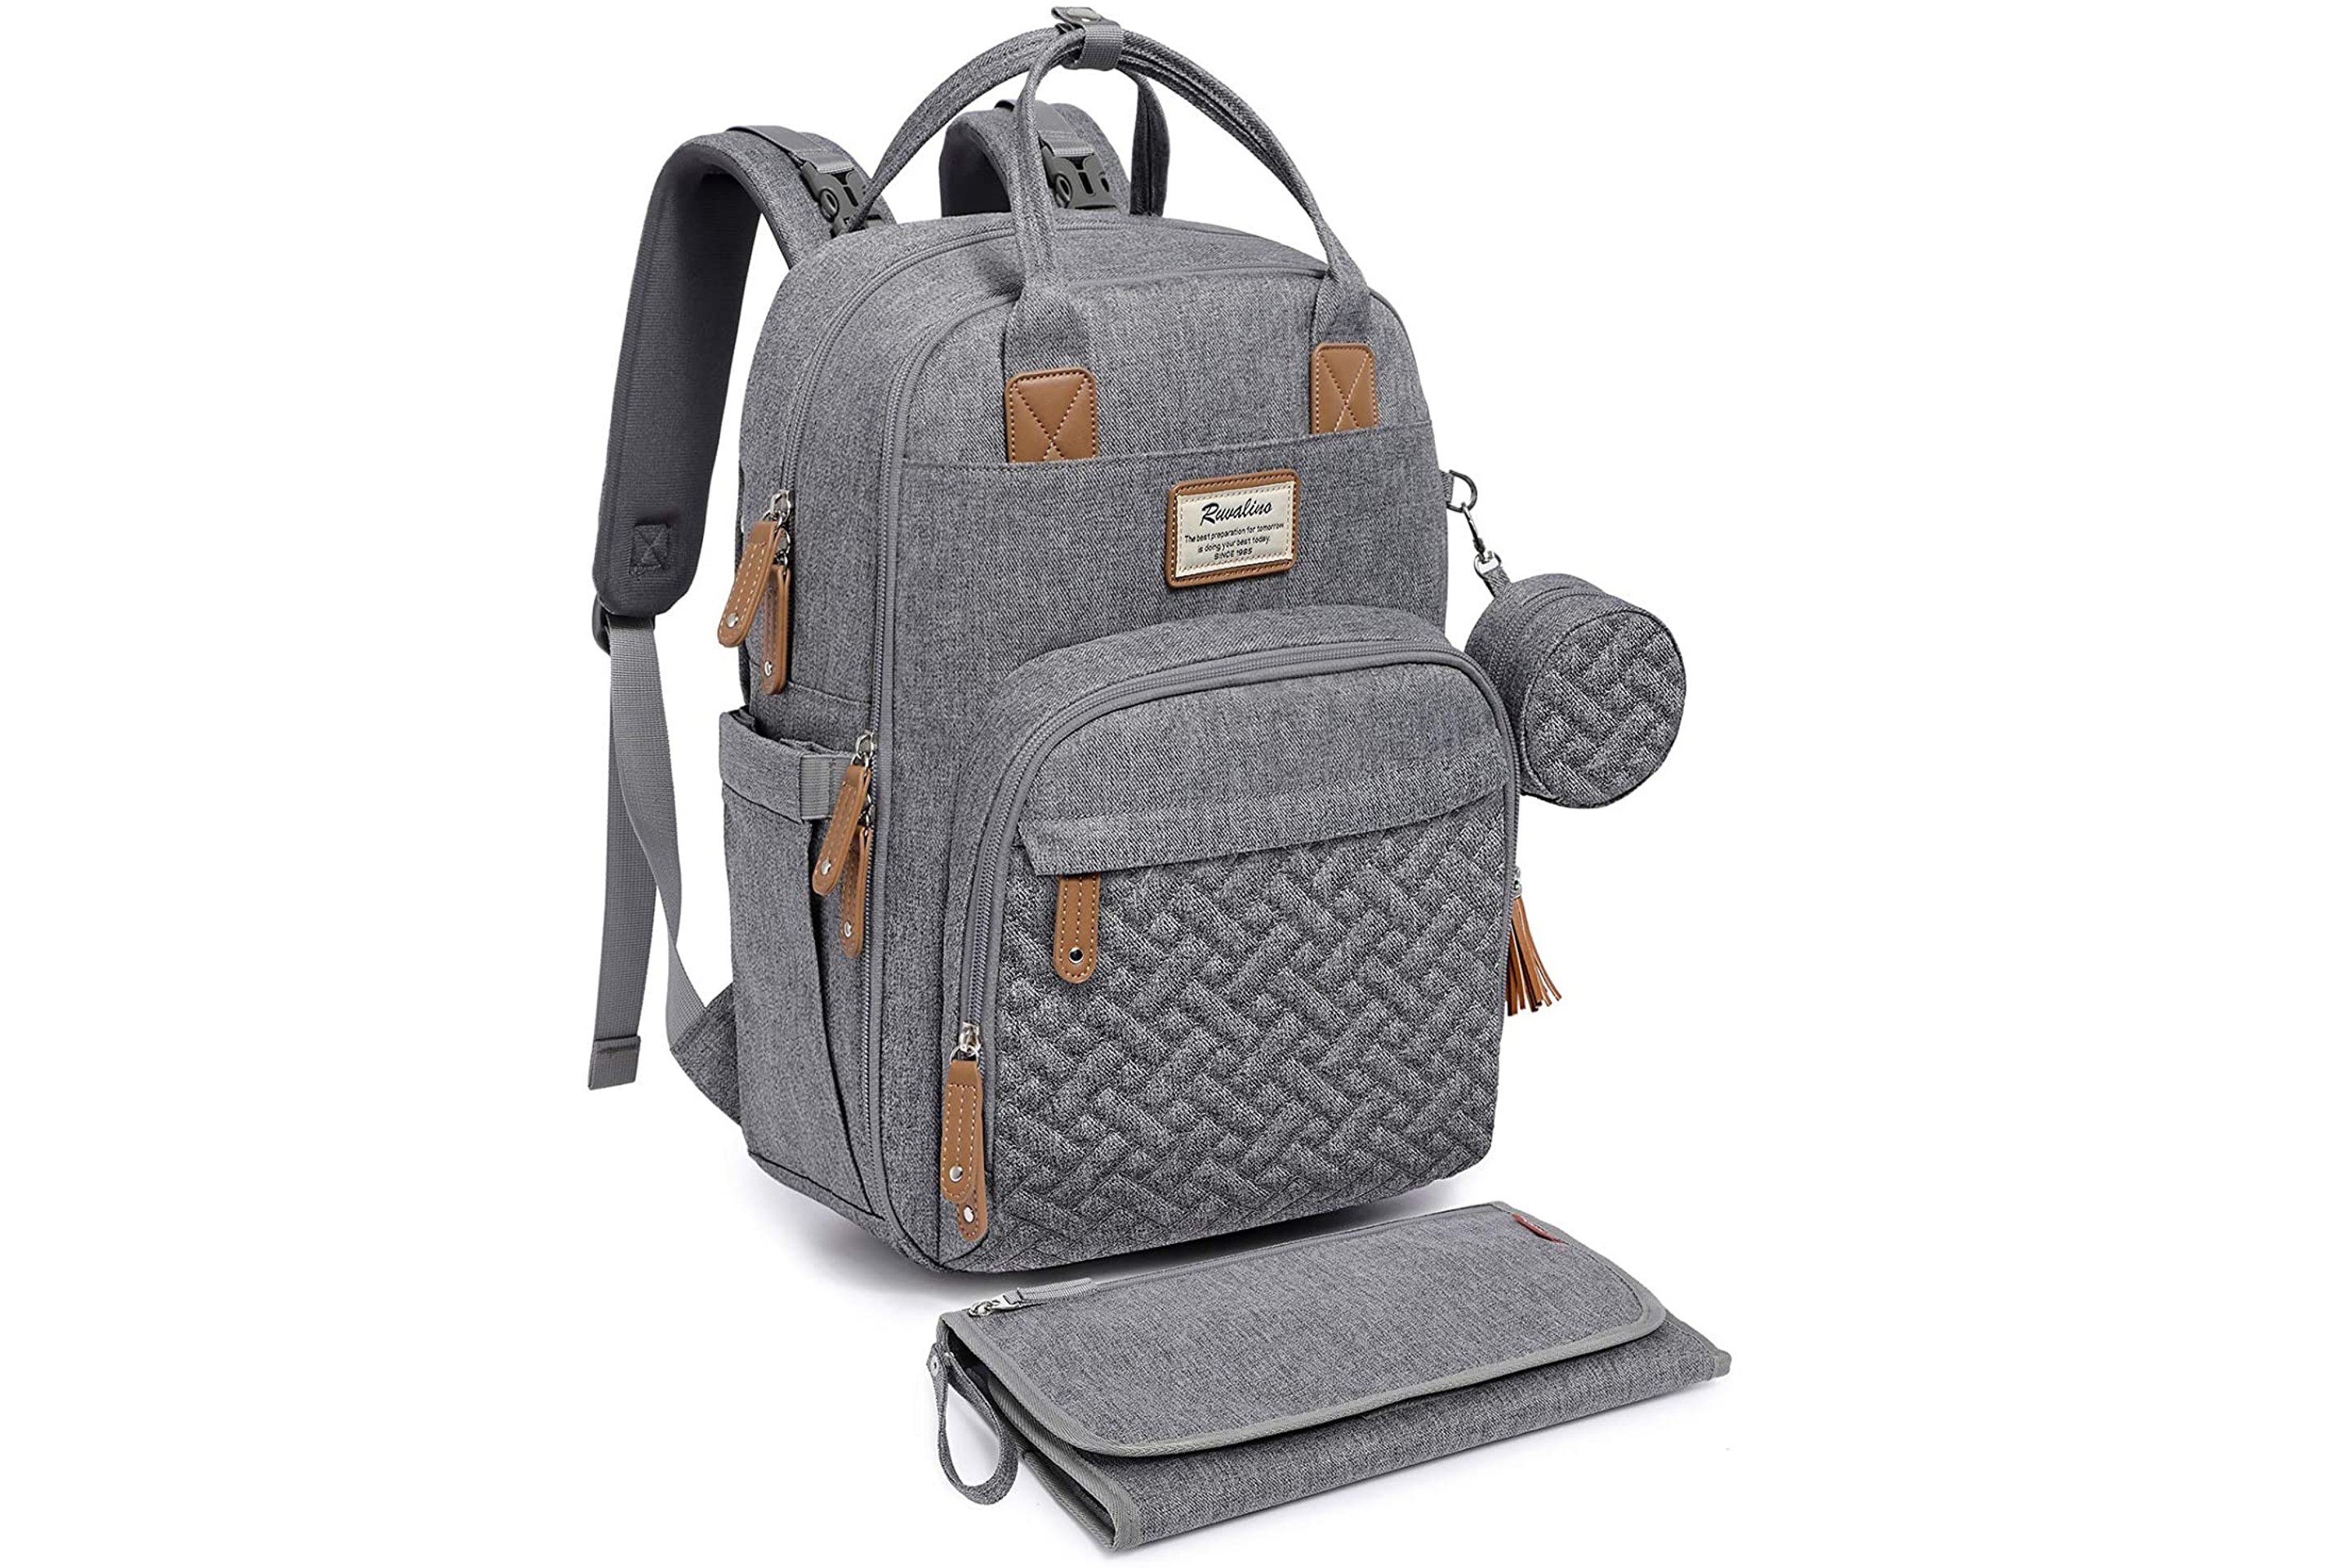 Ruvalino All-In-One Diaper Bag Backpack